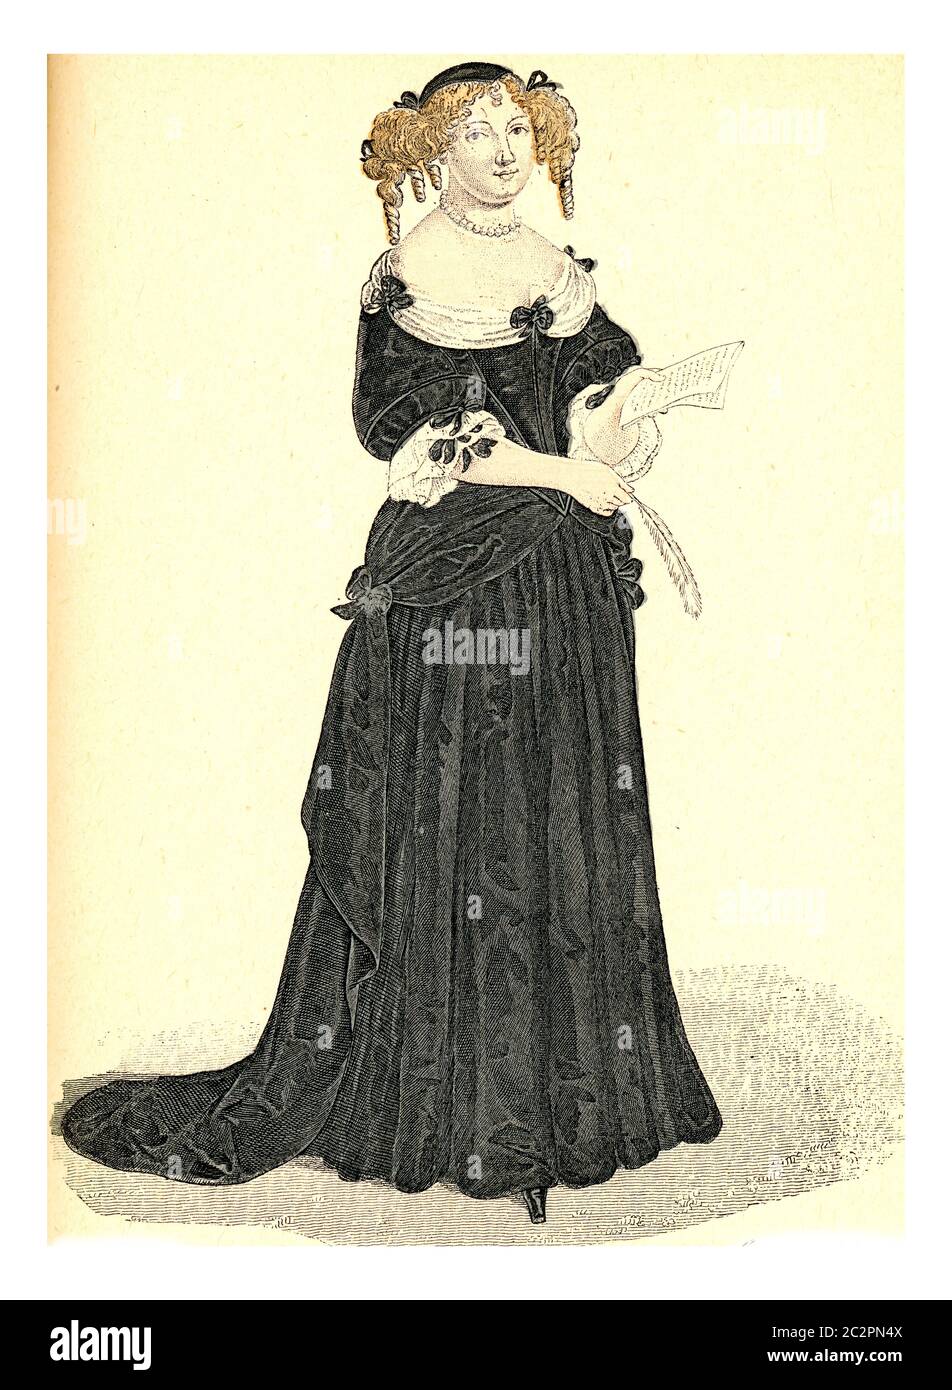 Madame de Sevigne, vintage engraved illustration. 12th to 18th century Fashion By Image. Stock Photo